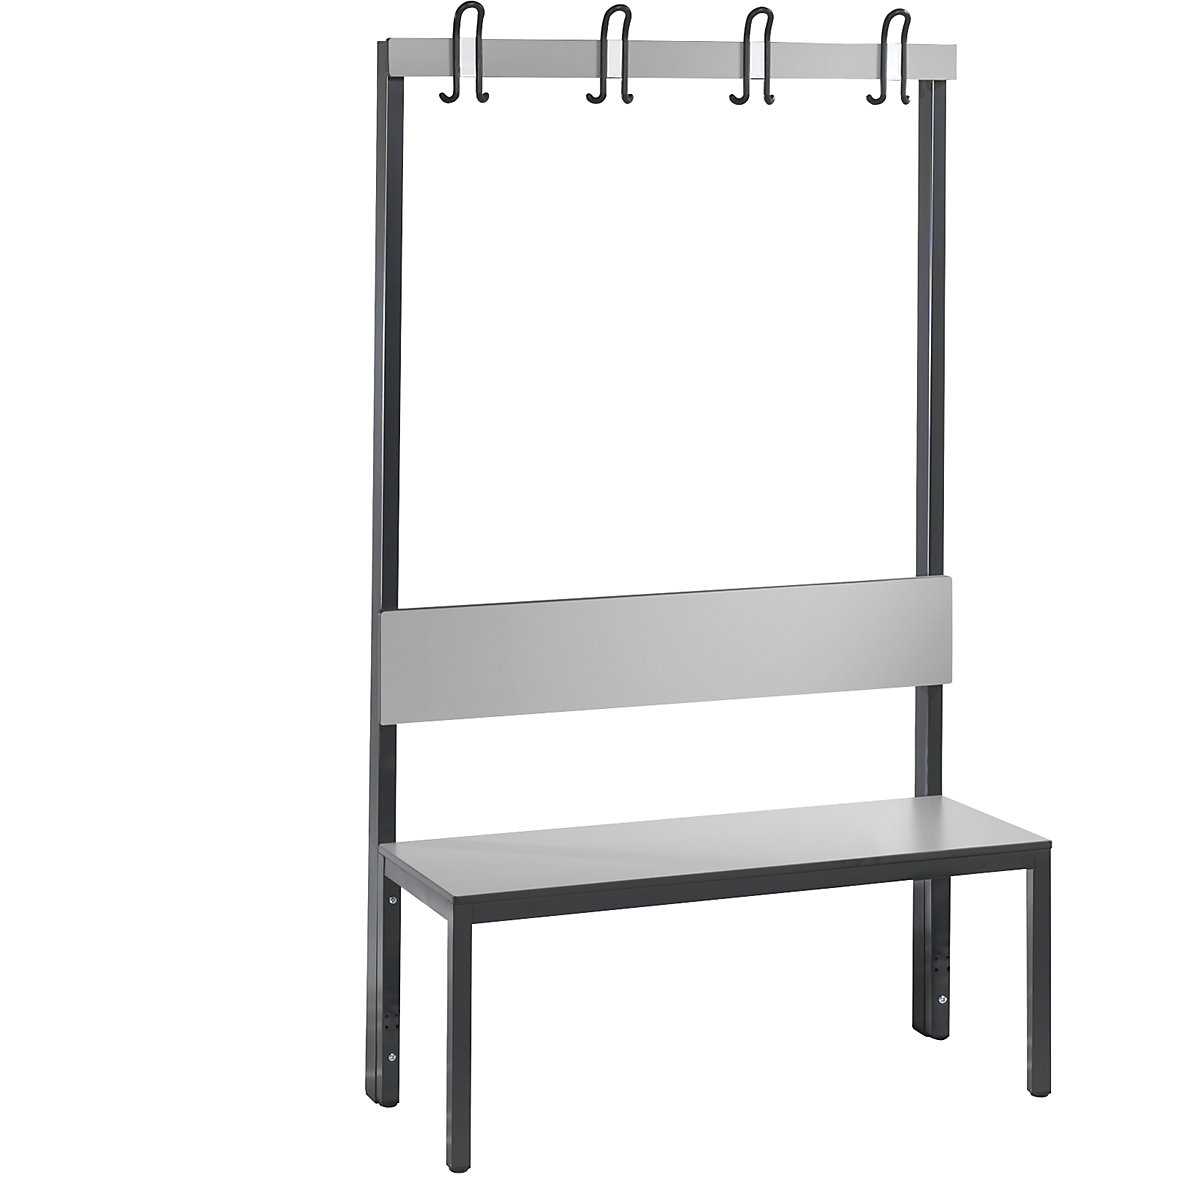 BASIC PLUS cloakroom bench, single sided – C+P, seat HPL, hook rail, length 1000 mm, silver grey-6